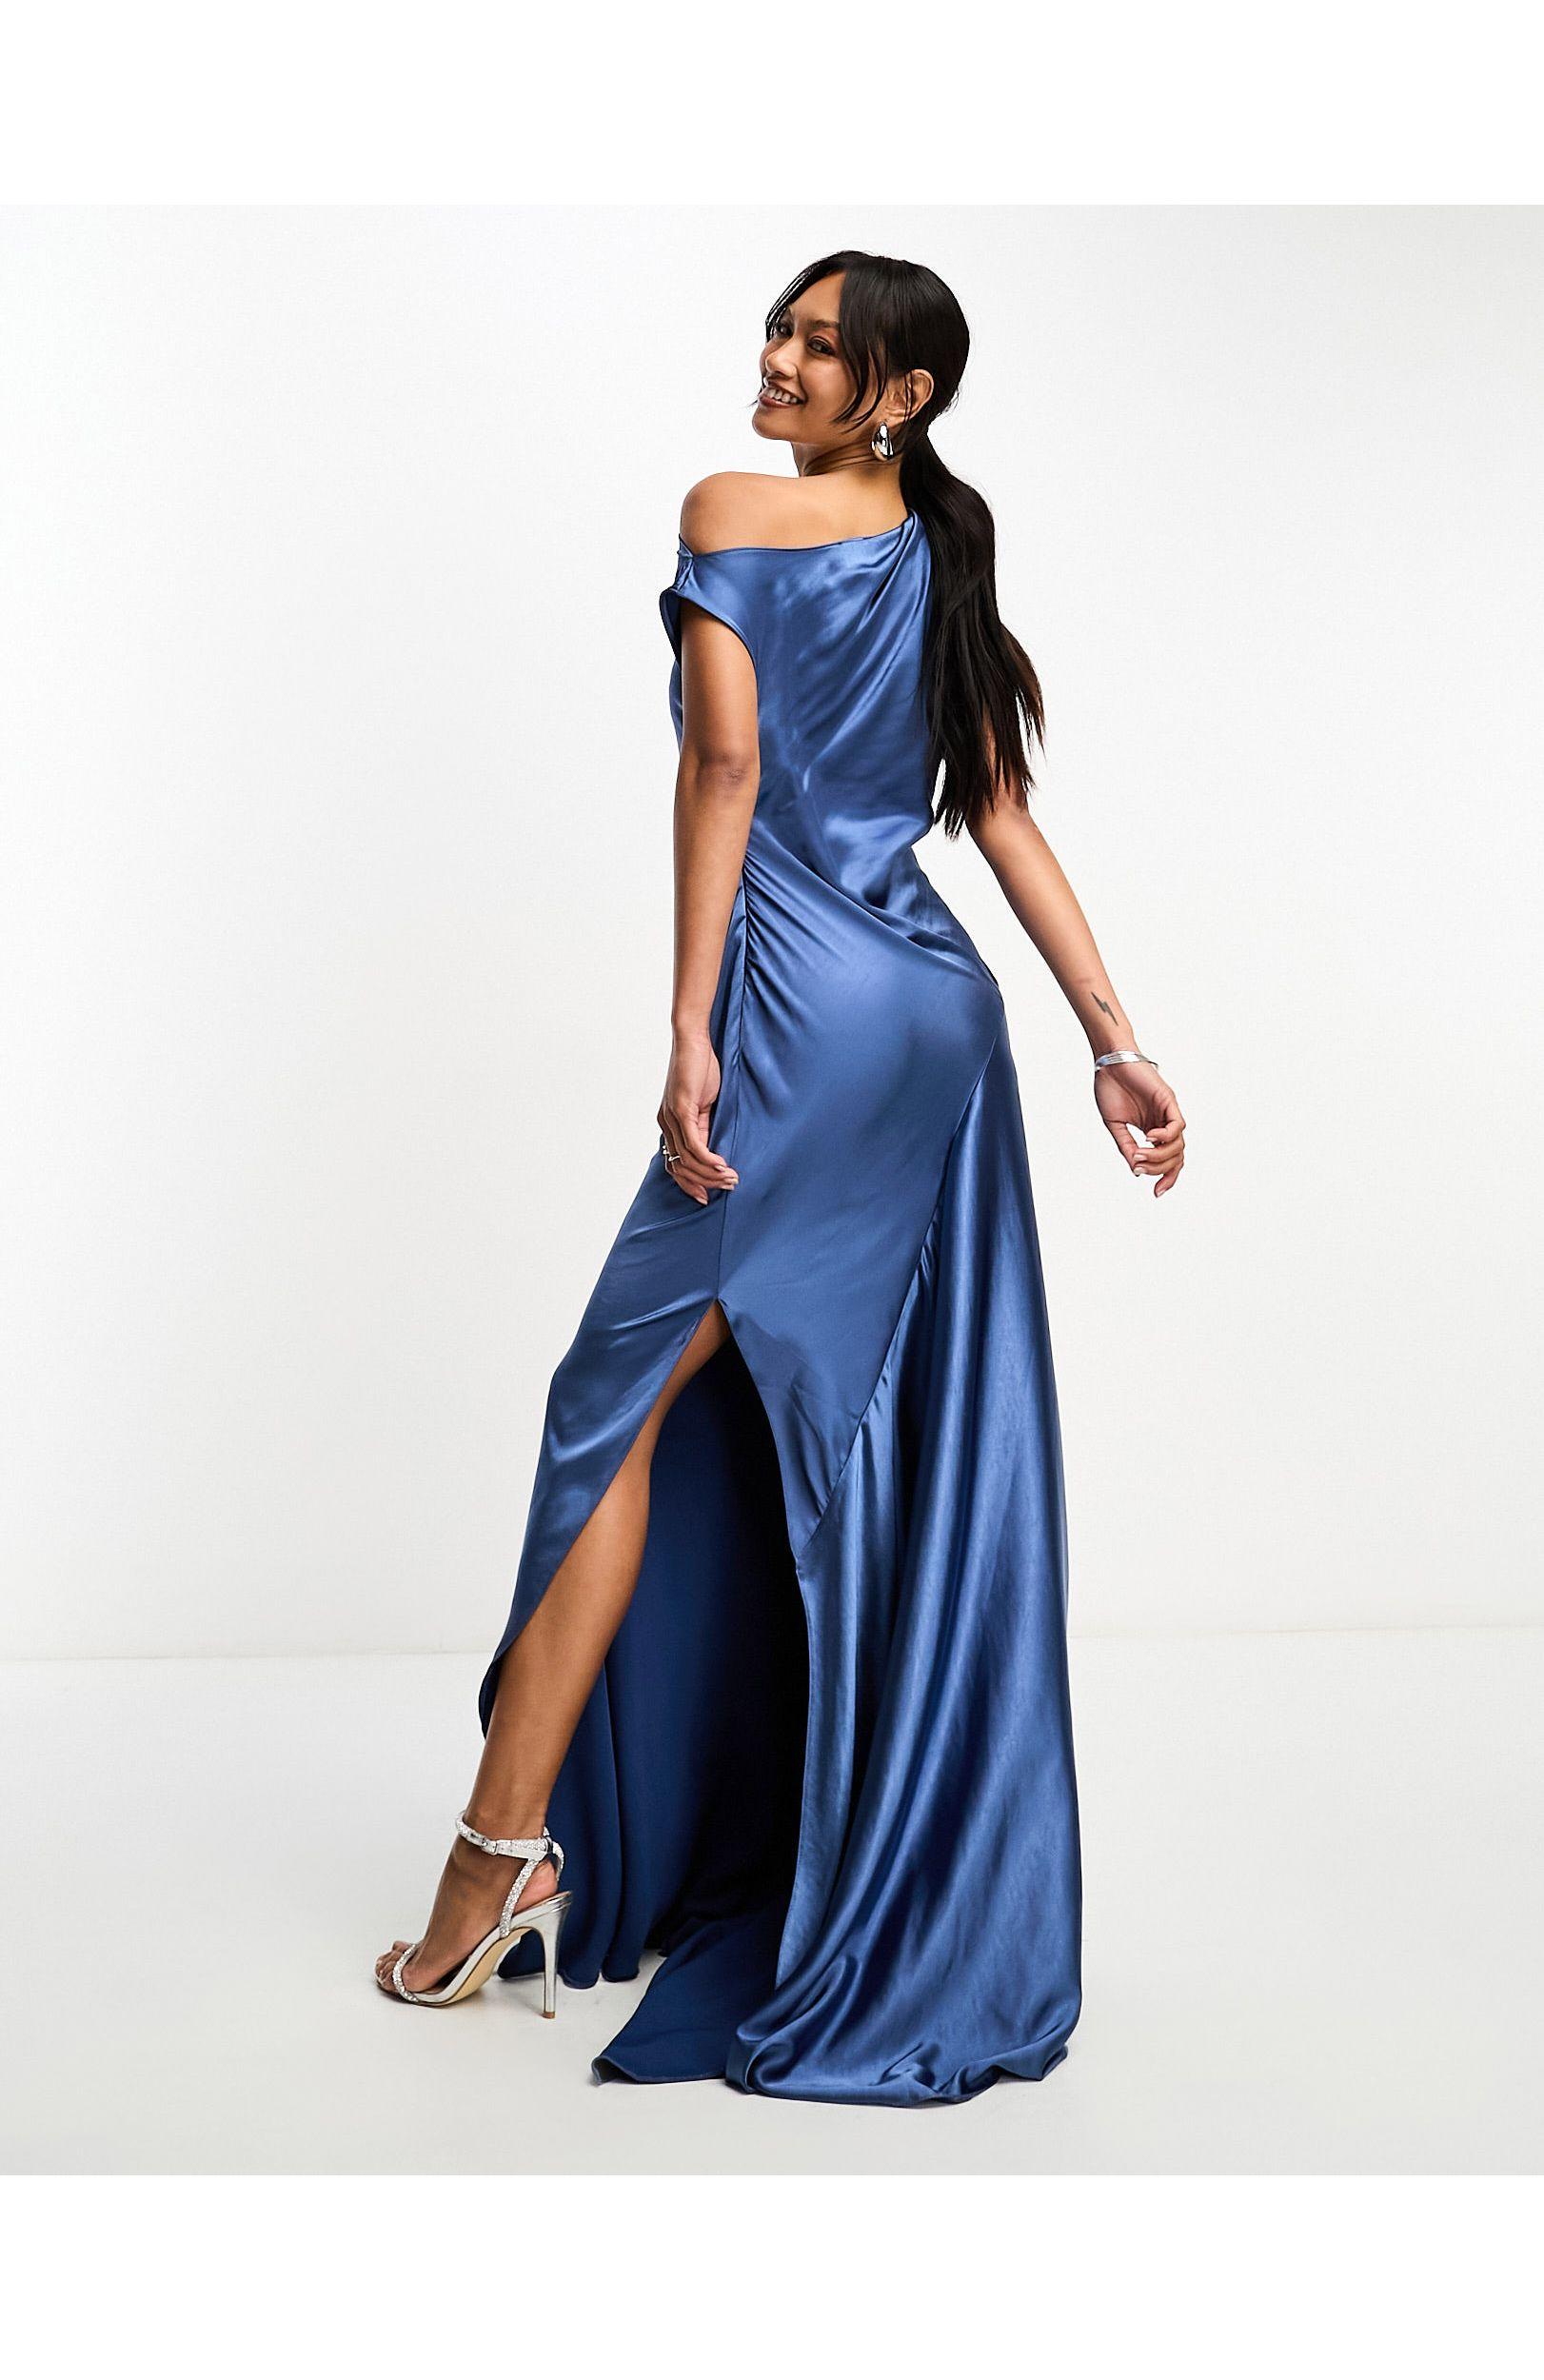 https://cdna.lystit.com/photos/asos/45f4484b/asos-Blue-Satin-Twist-Shoulder-Drape-Maxi-Dress-With-Puddle-Hem.jpeg